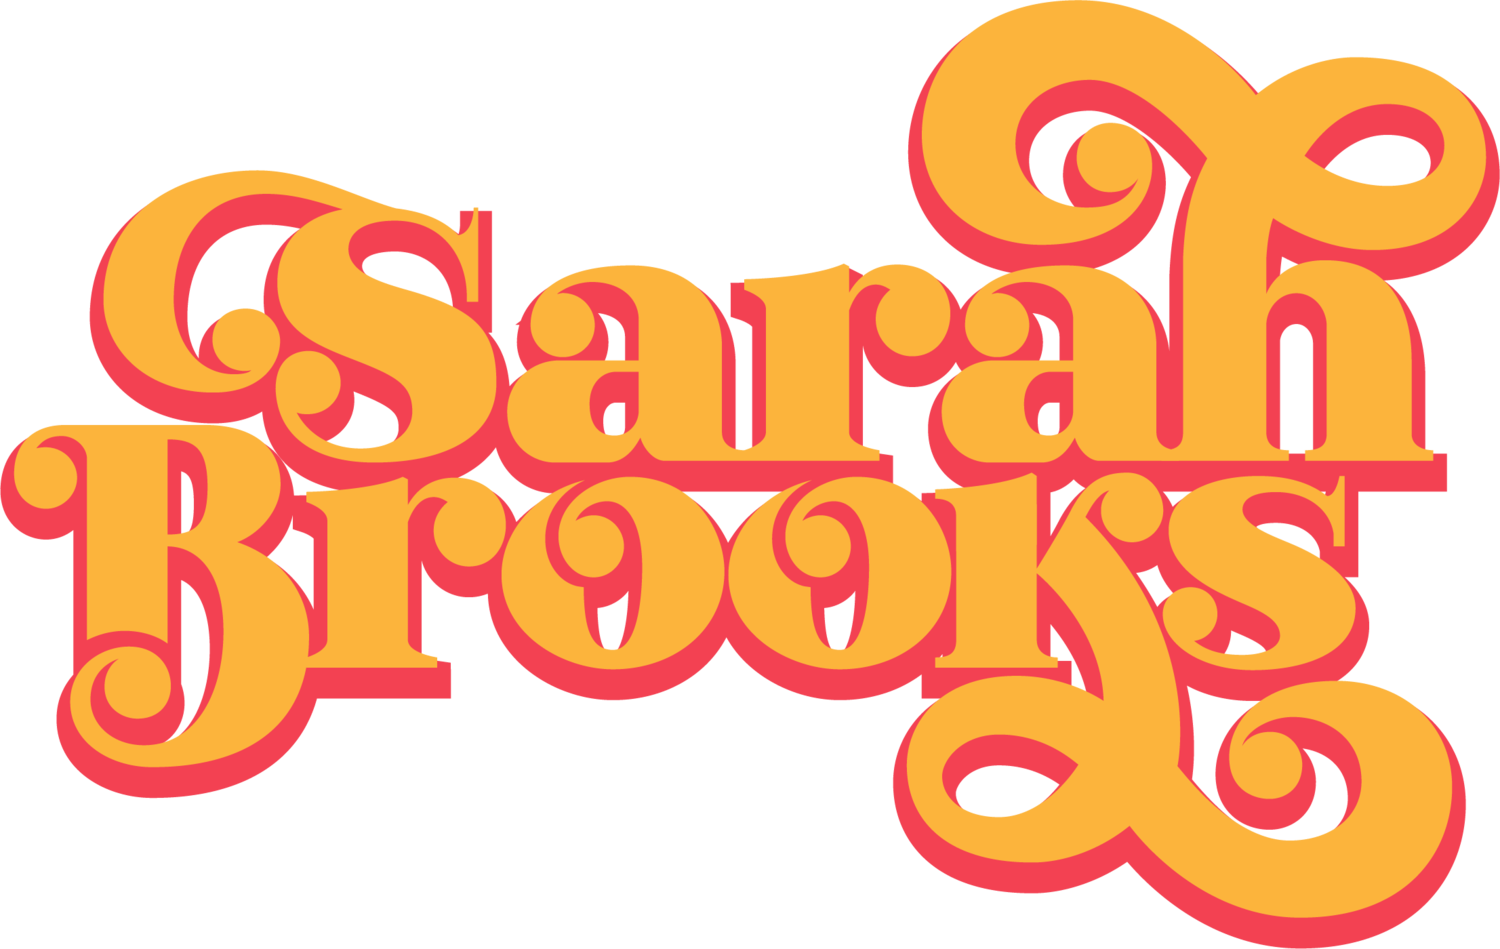 Sarah Brooks